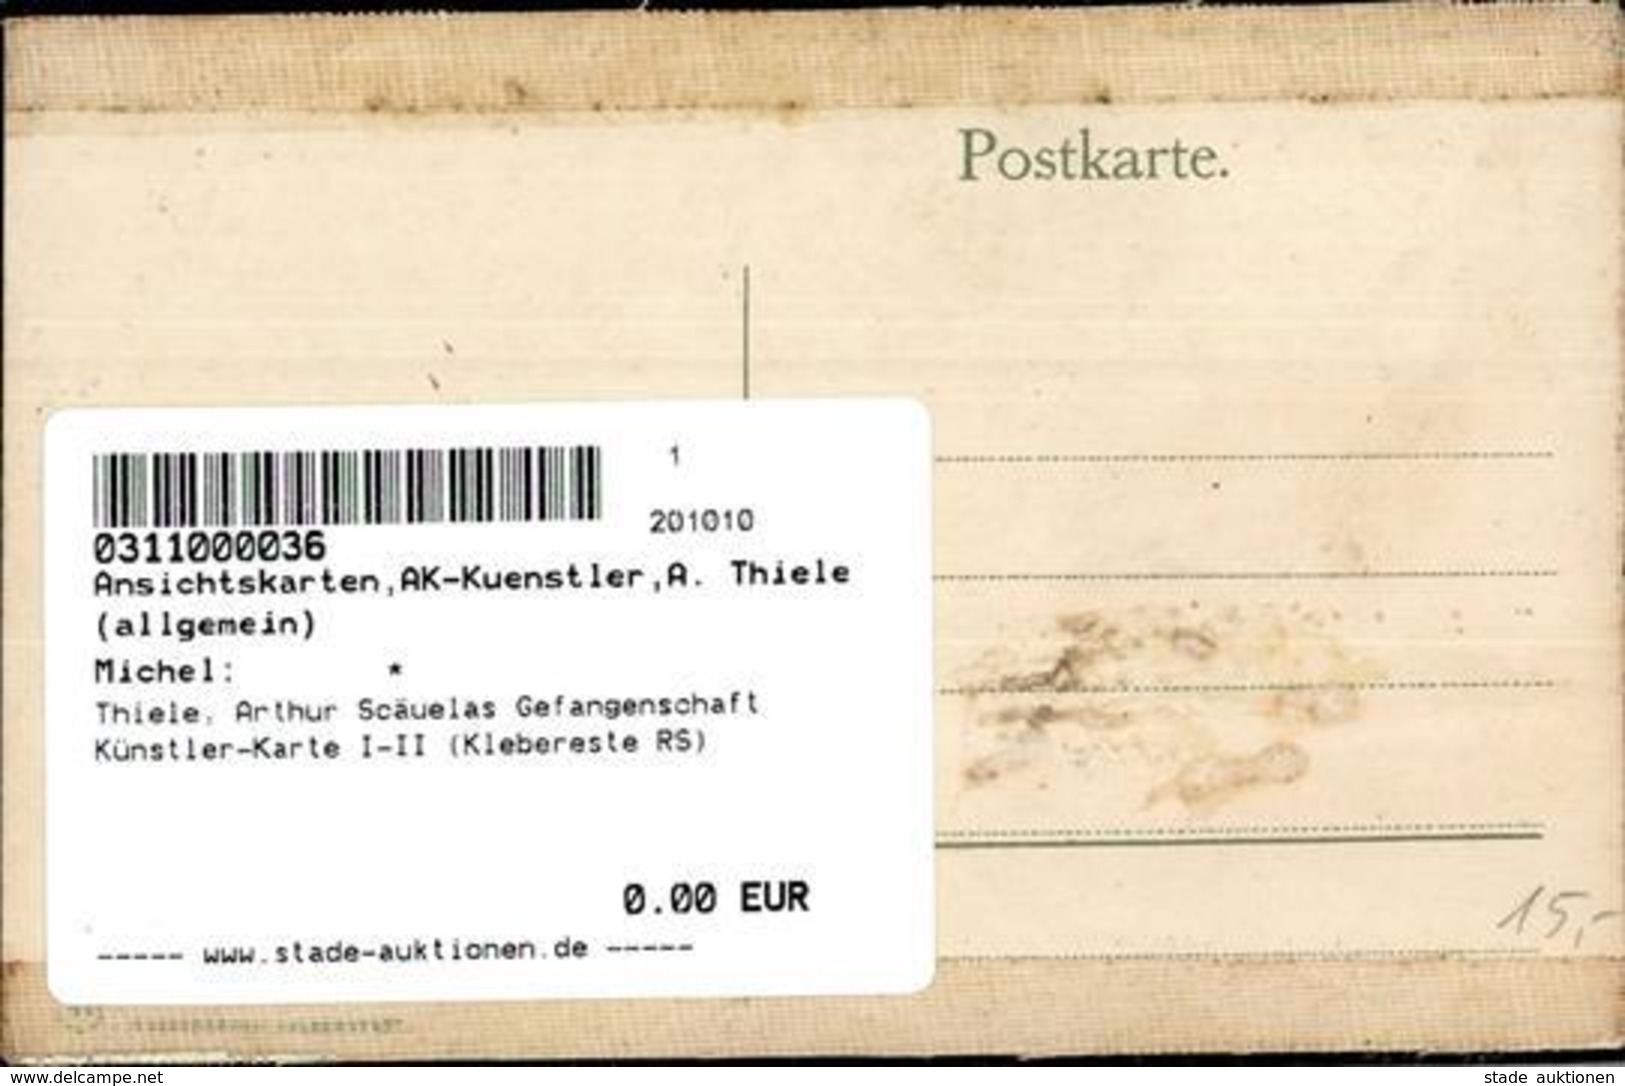 Thiele, Arthur Scäuelas Gefangenschaft Künstler-Karte I-II (Klebereste RS) - Thiele, Arthur